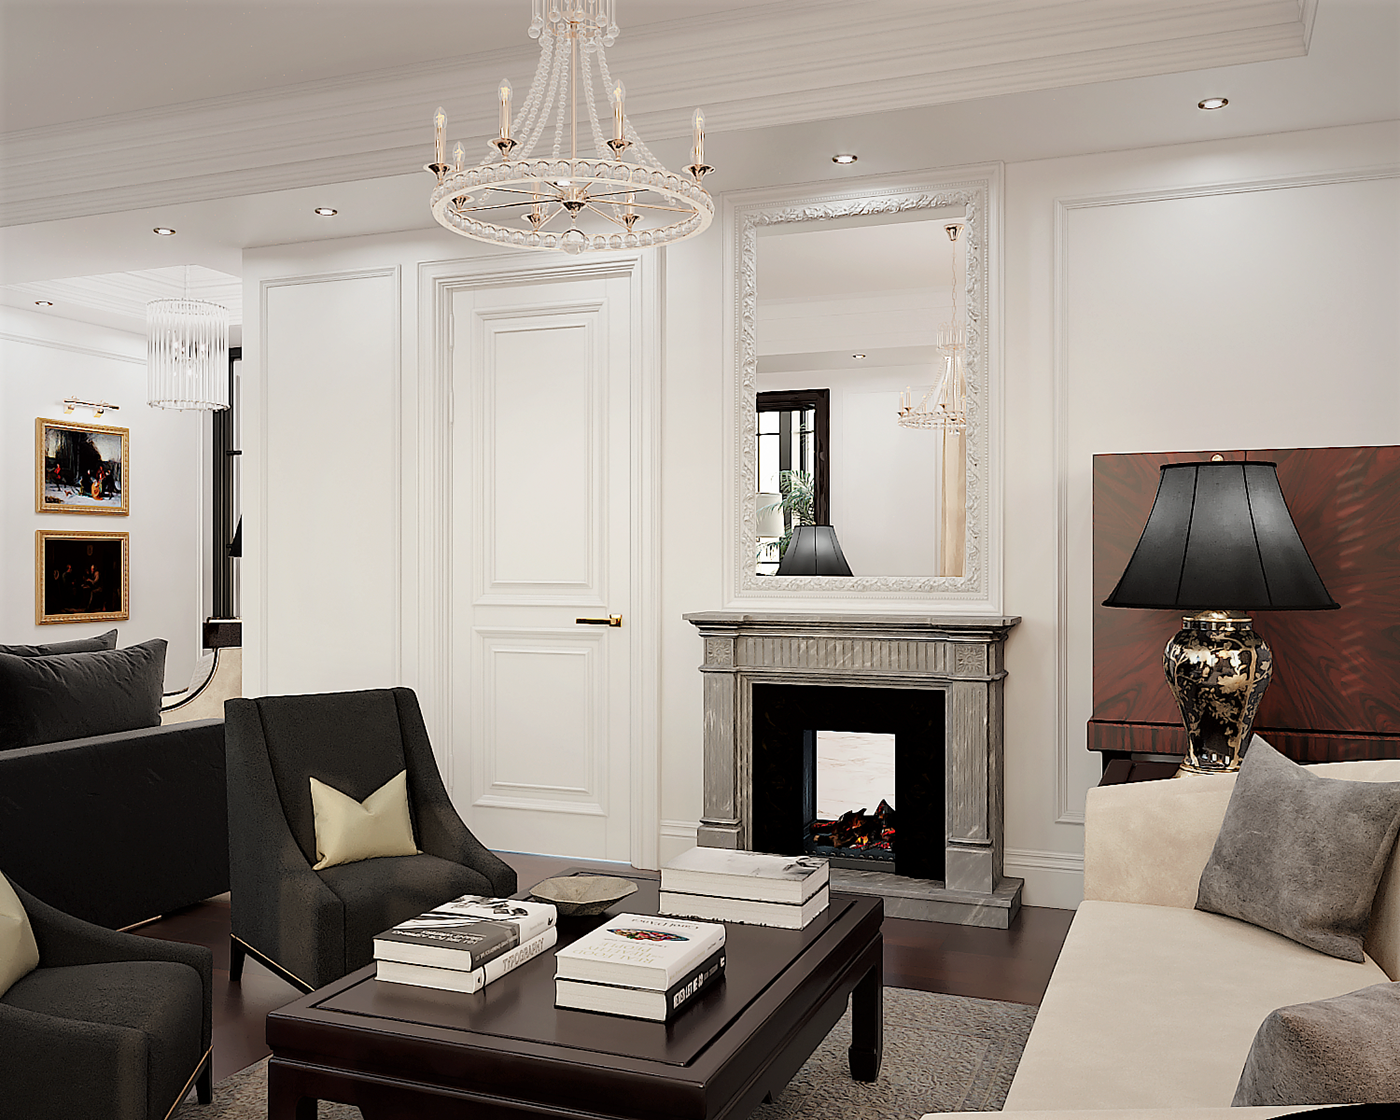 Визуализация интерьера Render interior styling визуализация home design luxury houses home trends Luxury Home home styling